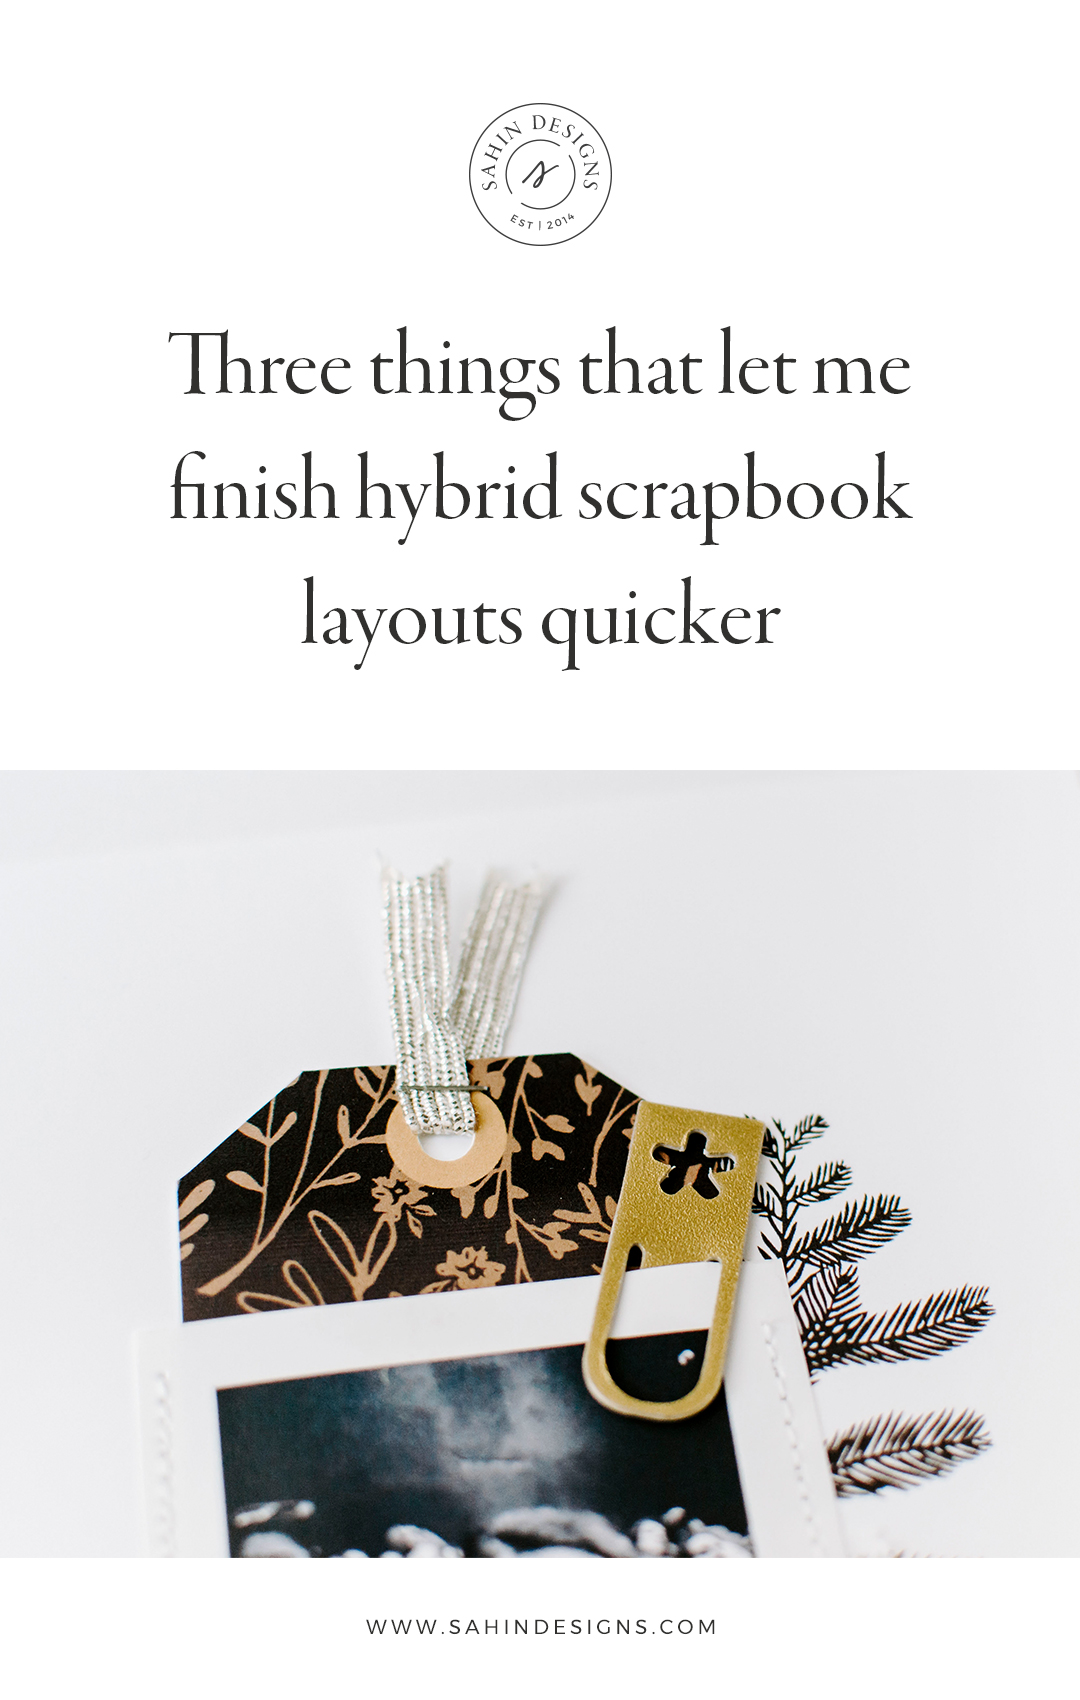 Three steps of finishing a hybrid scrapbook layout quick - Sahin Designs